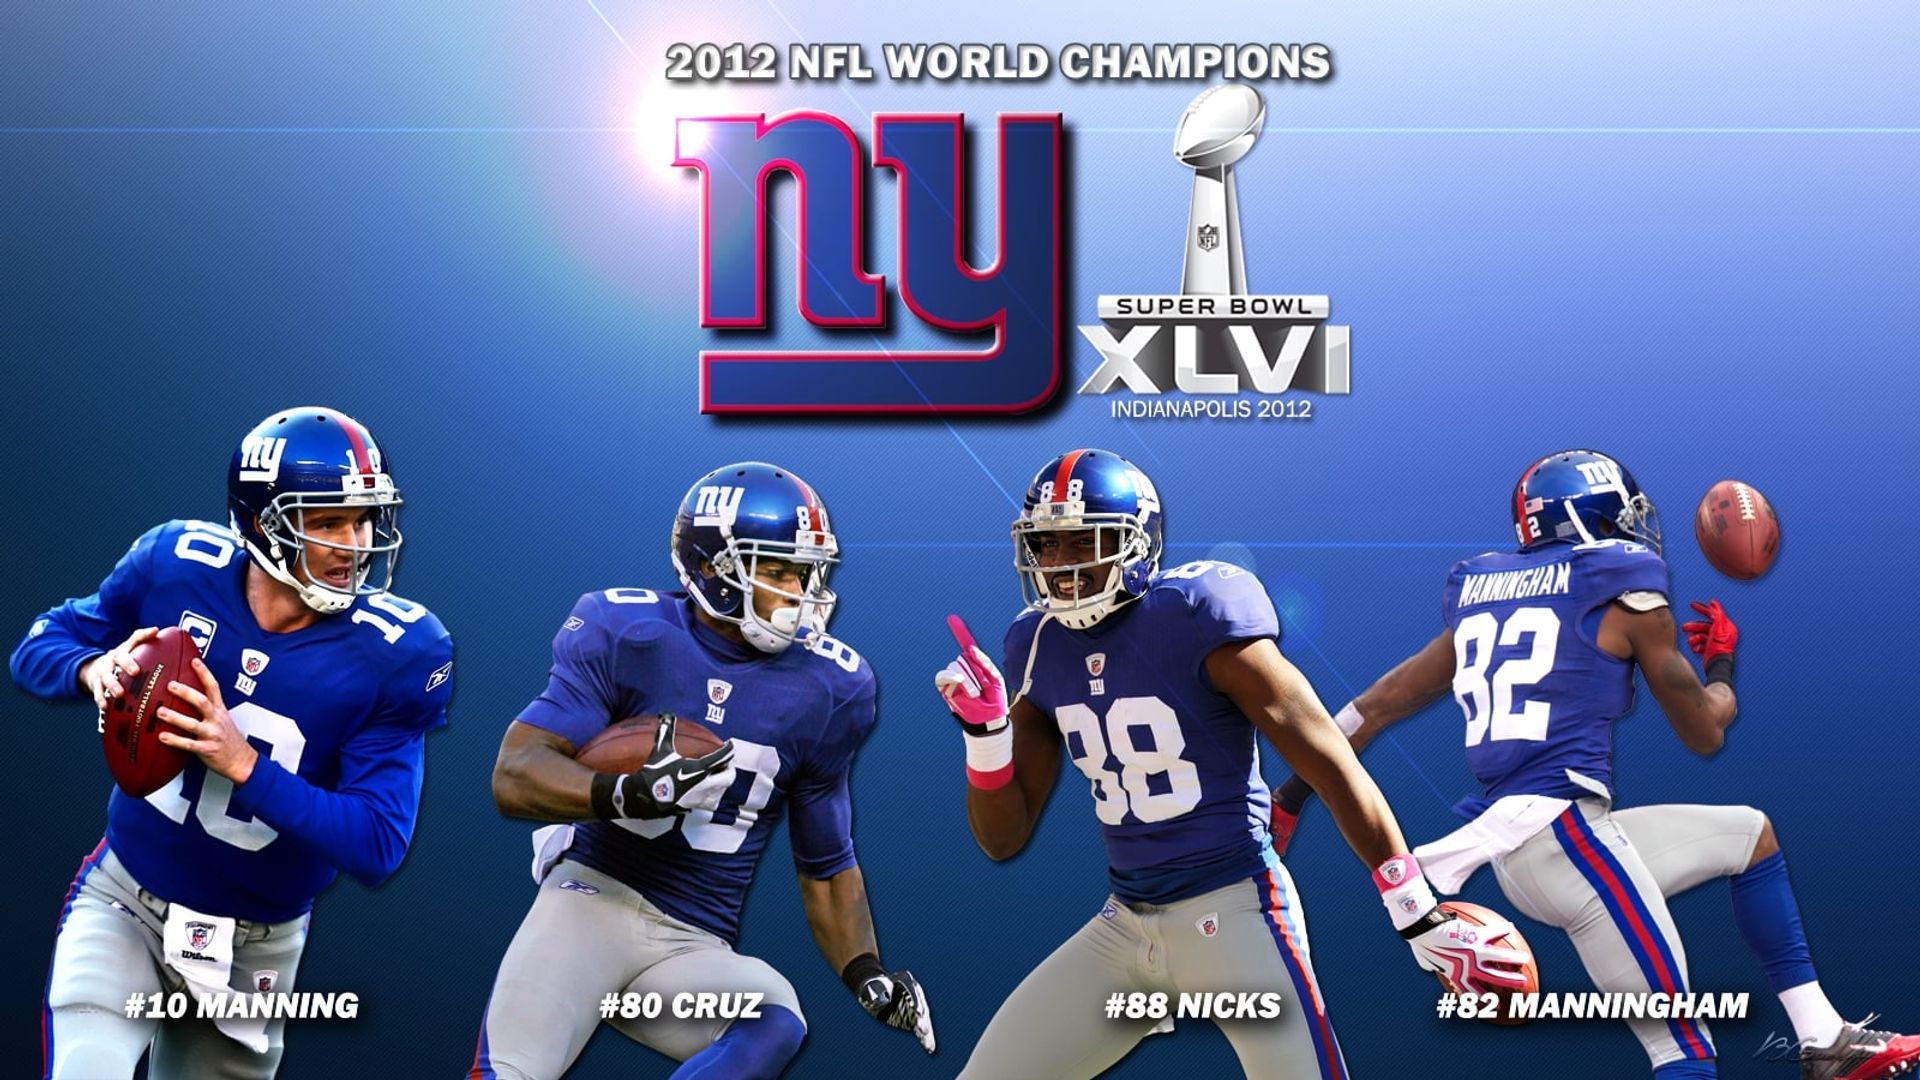 Super Bowl XLVI background